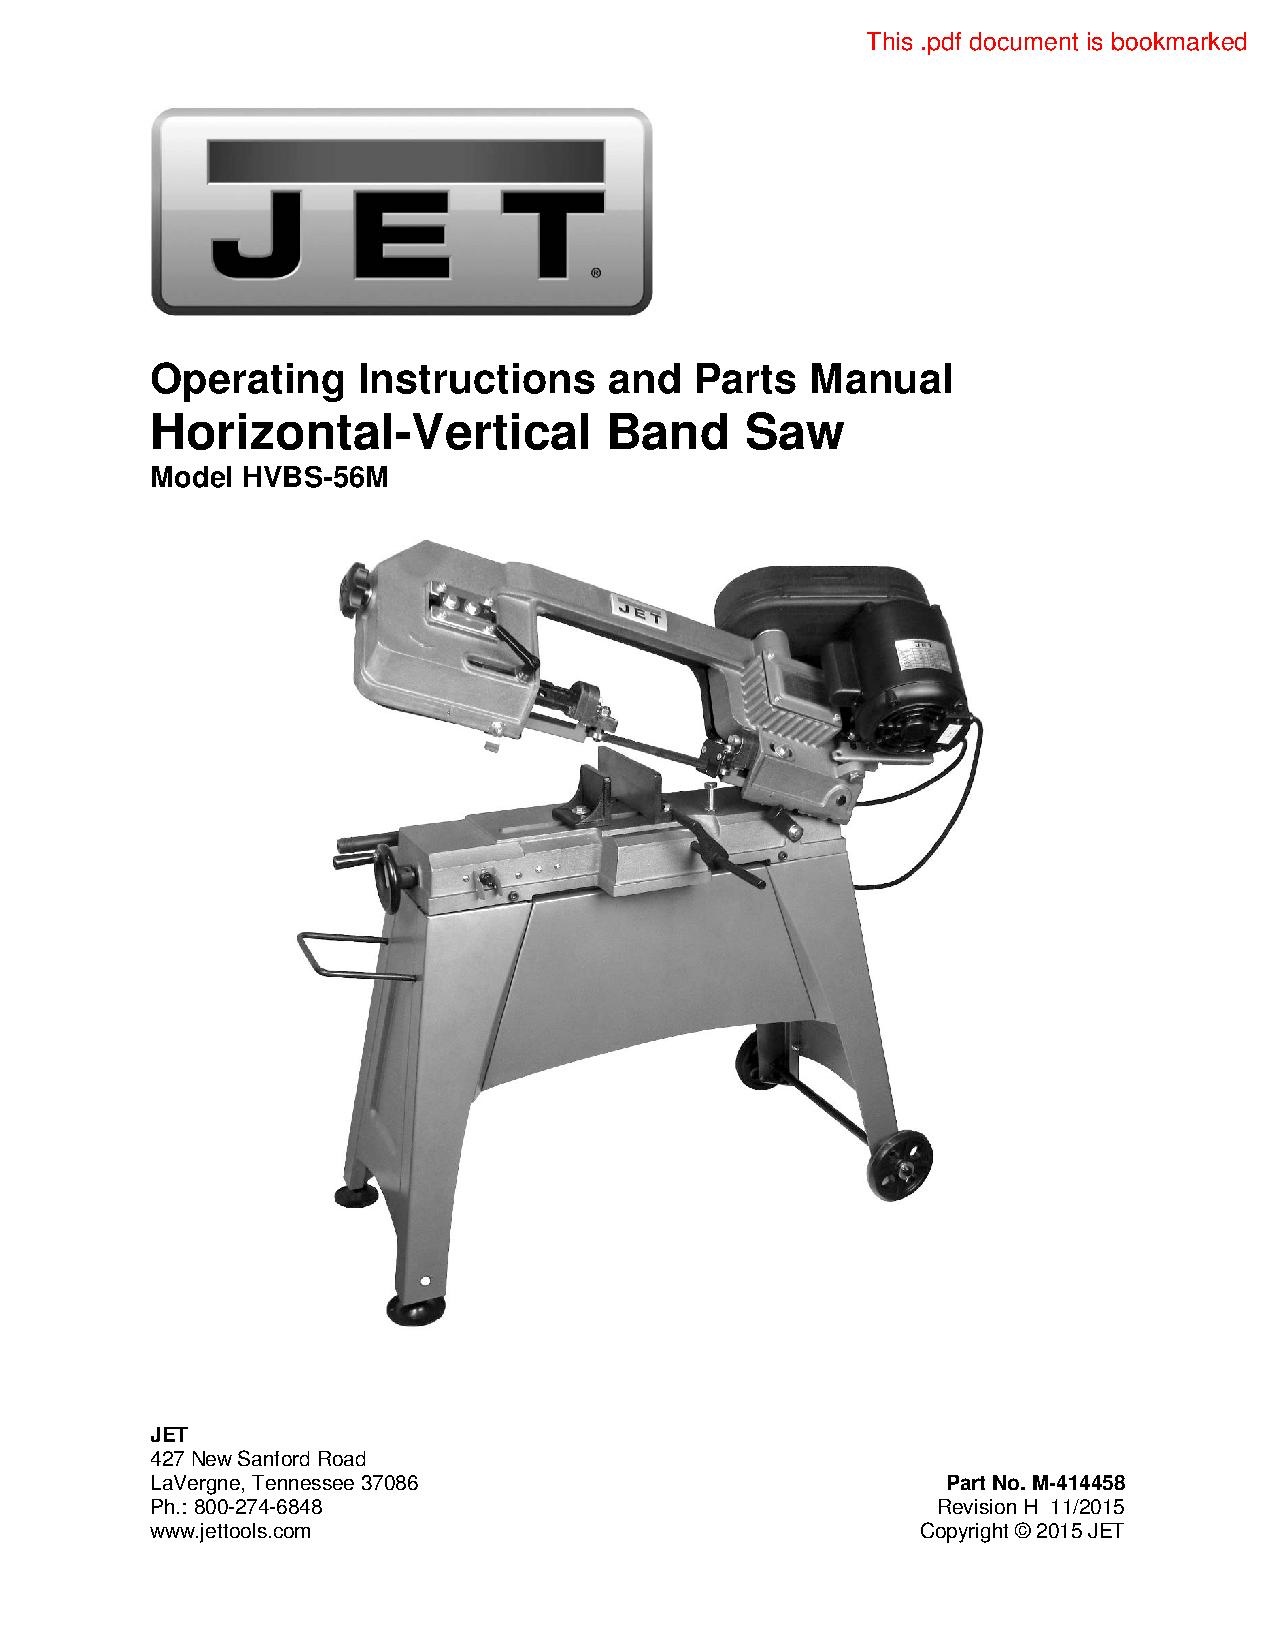 Jet Horizontal band saw model 414458 manual.pdf